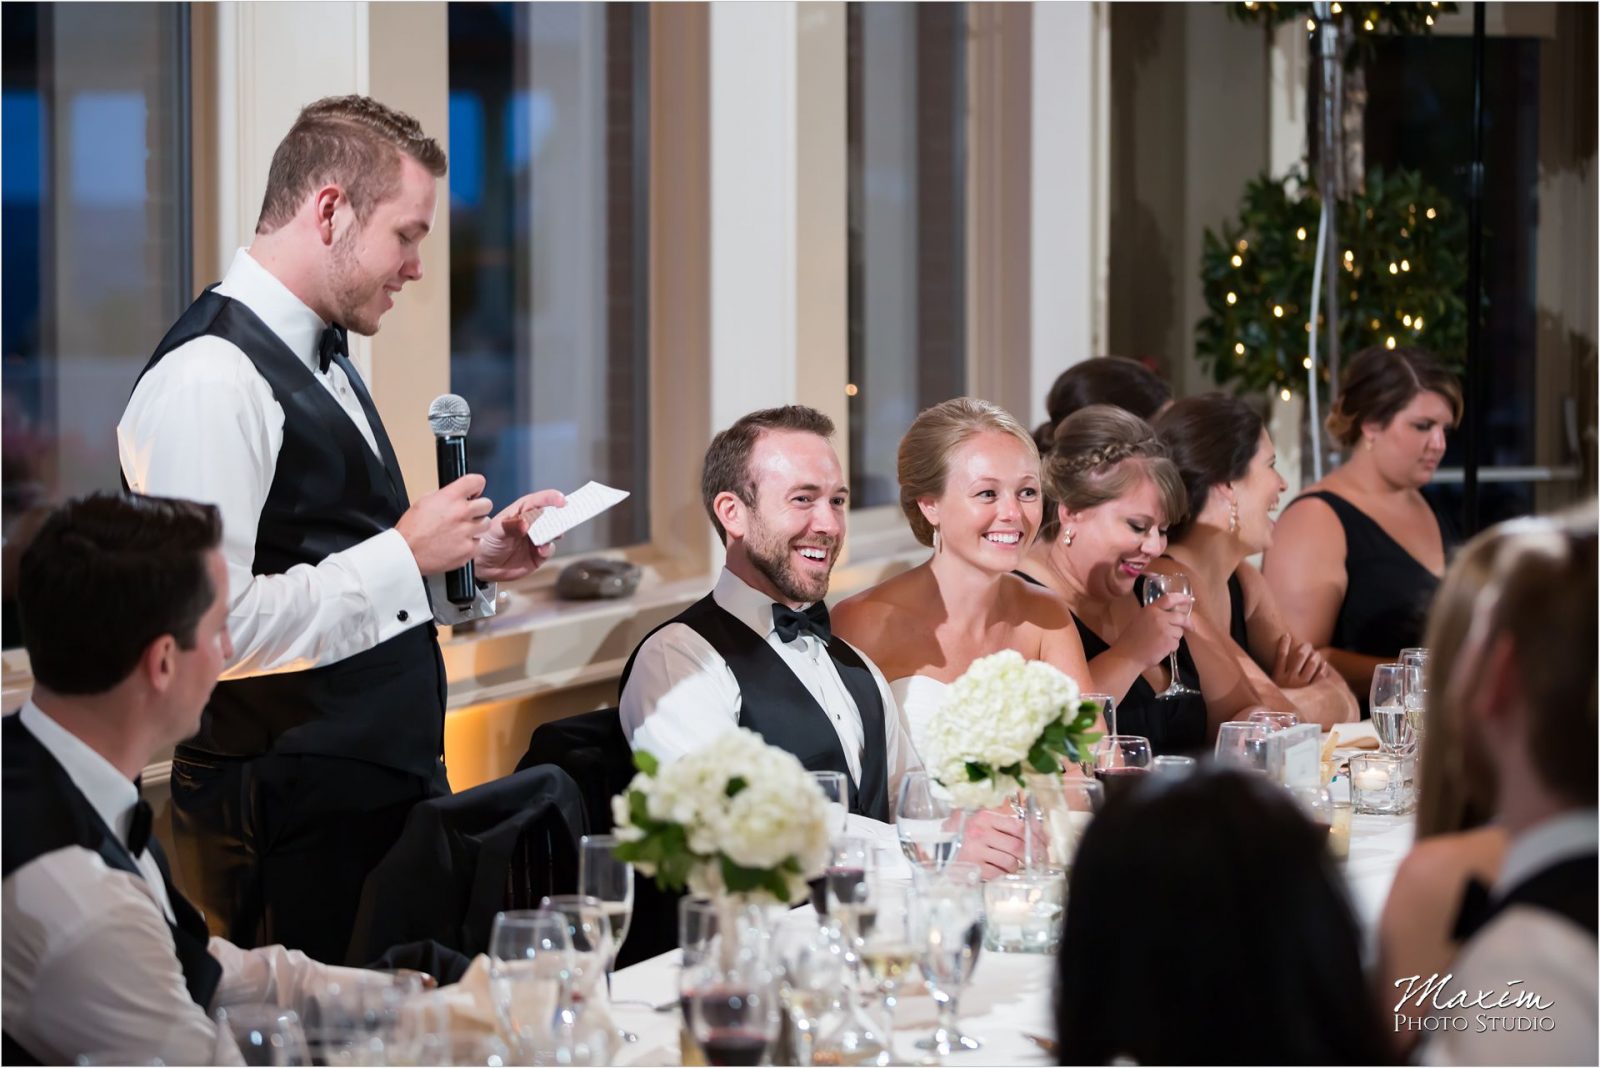 Drees Pavilion Covington Kentucky Wedding Reception Toasts